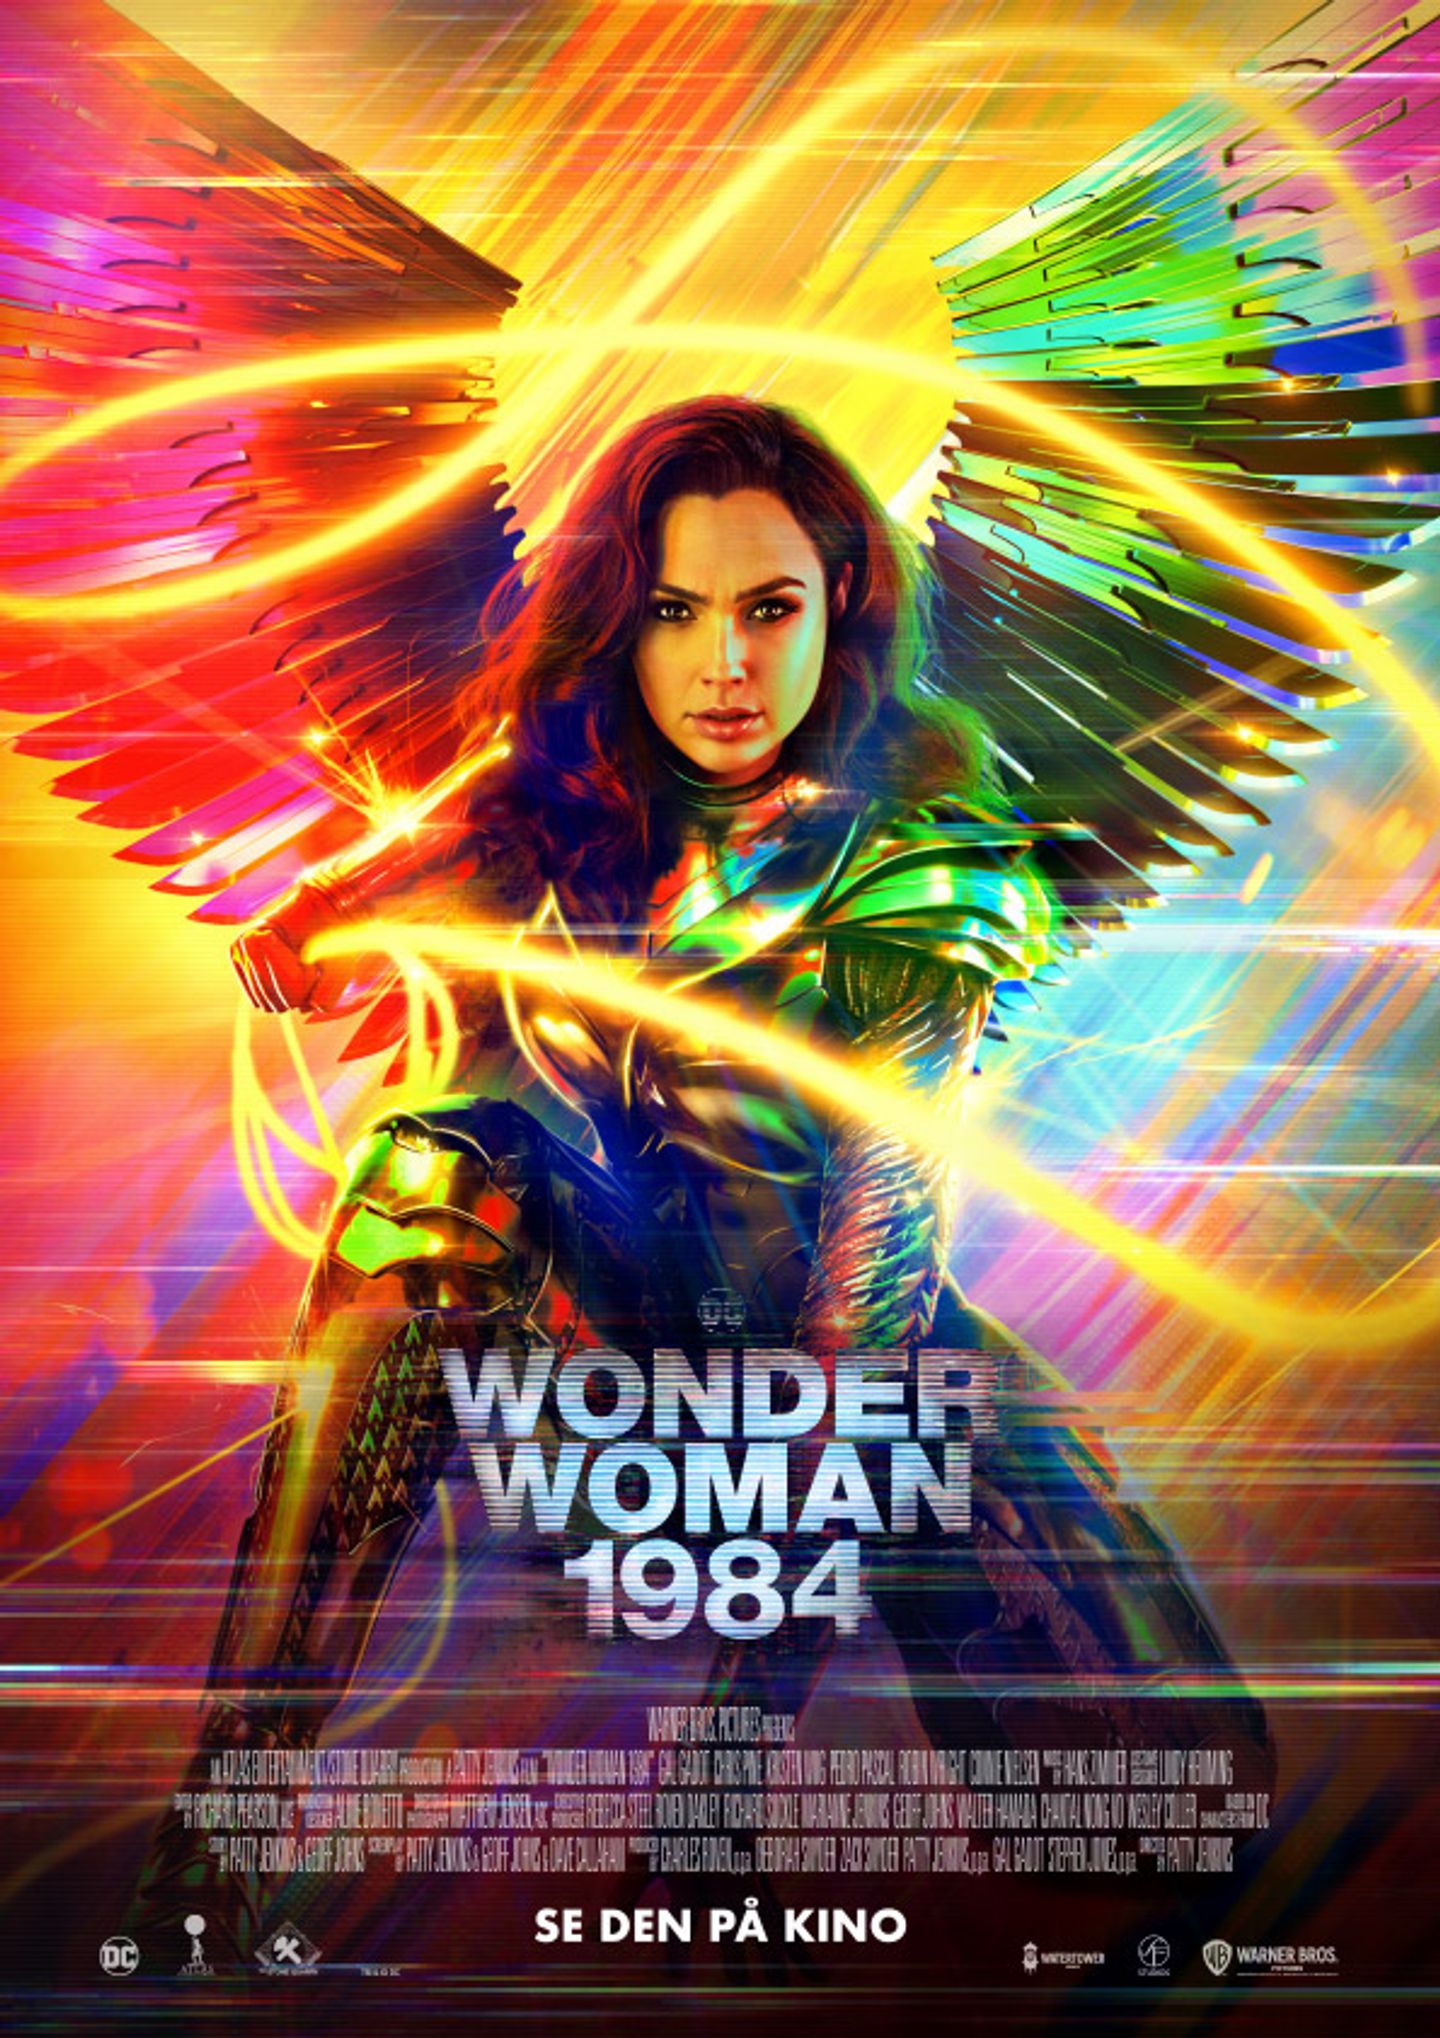 Plakat for 'Wonder Woman 1984'